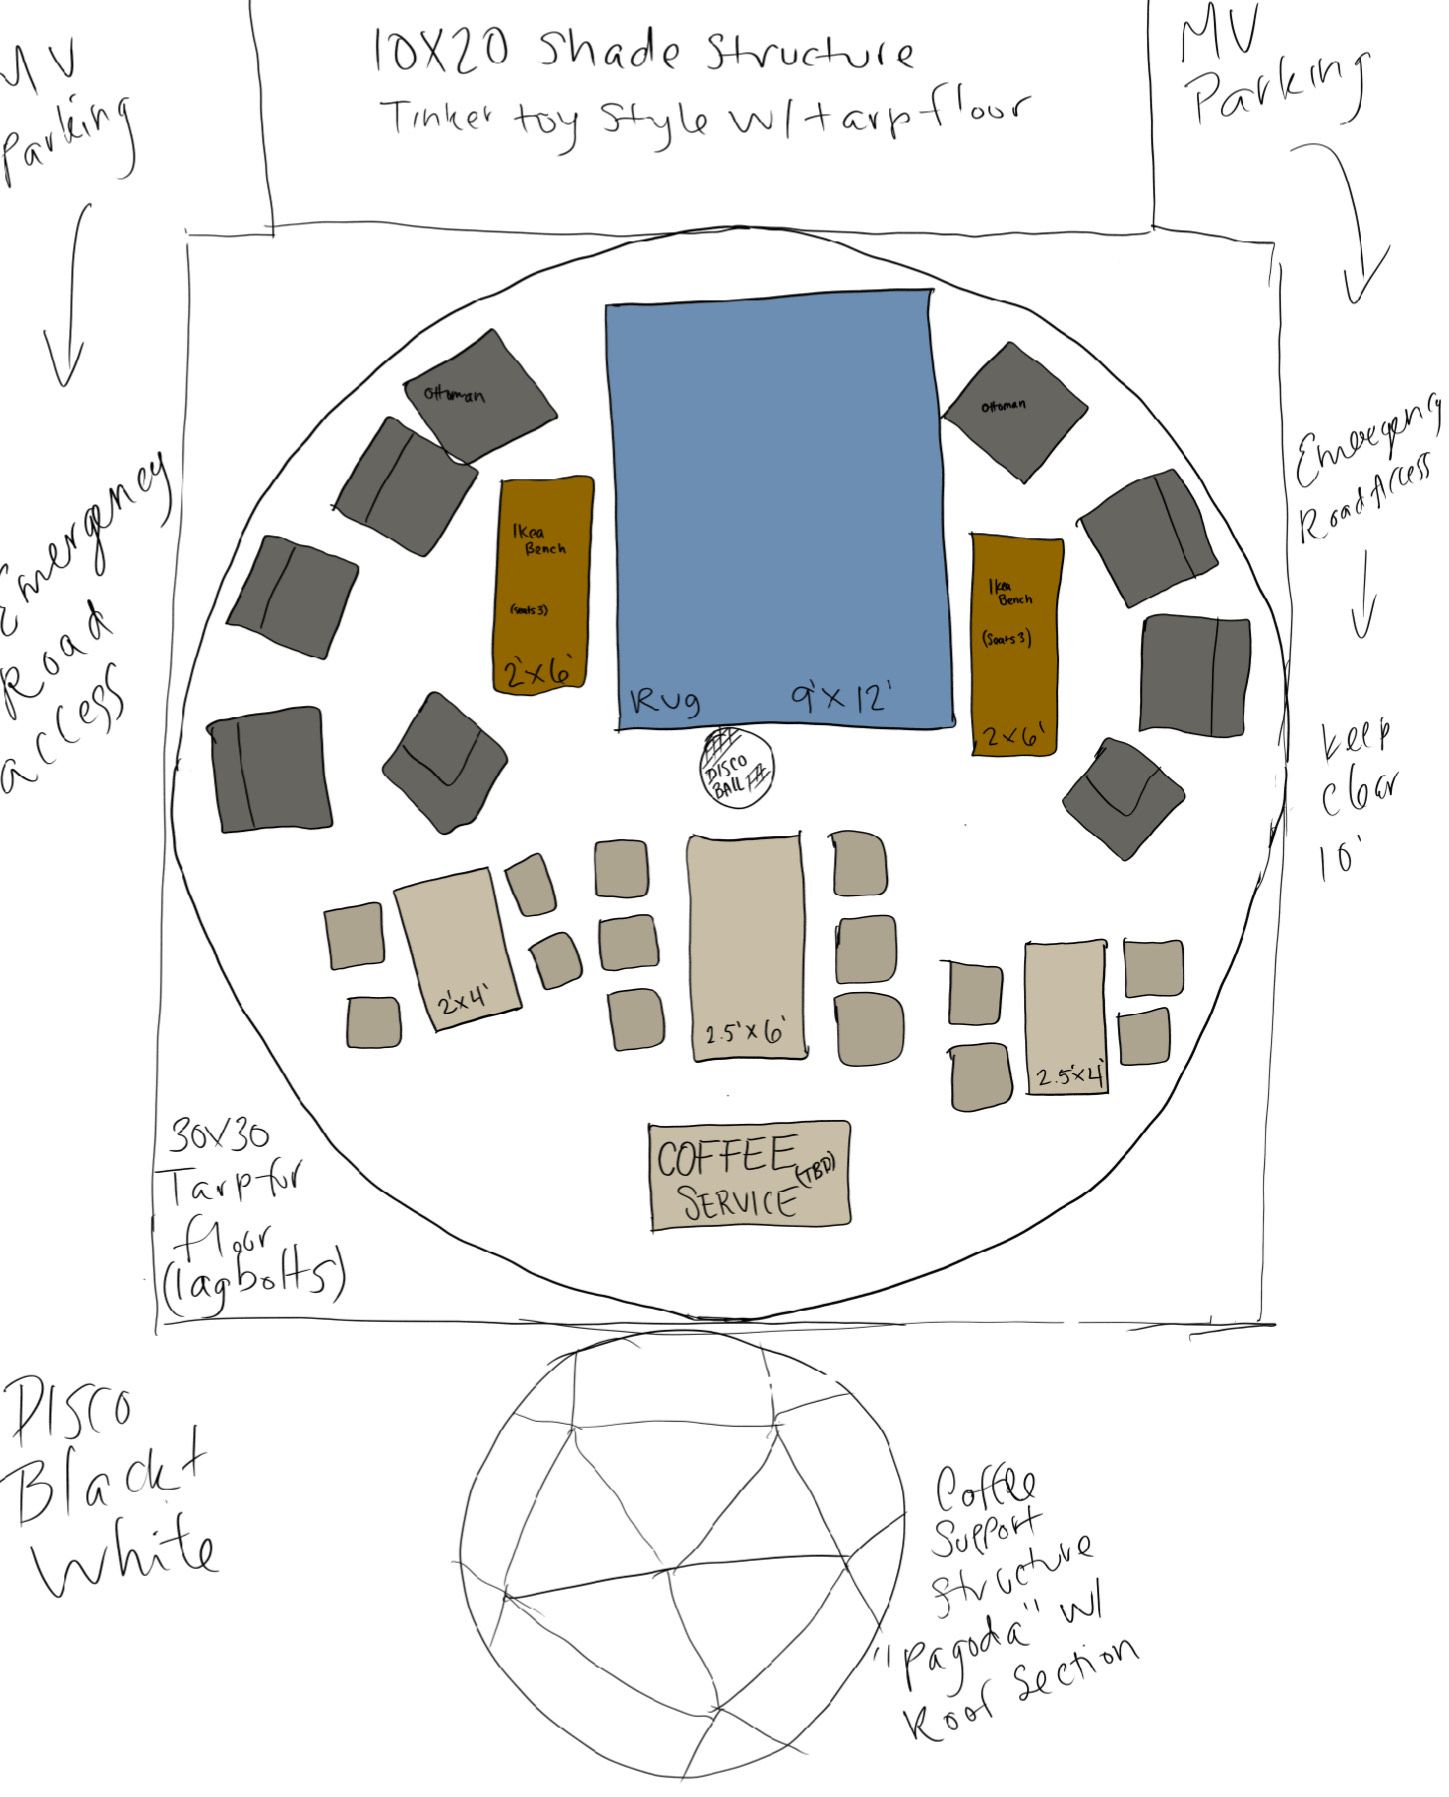 Early floor plan design sketch